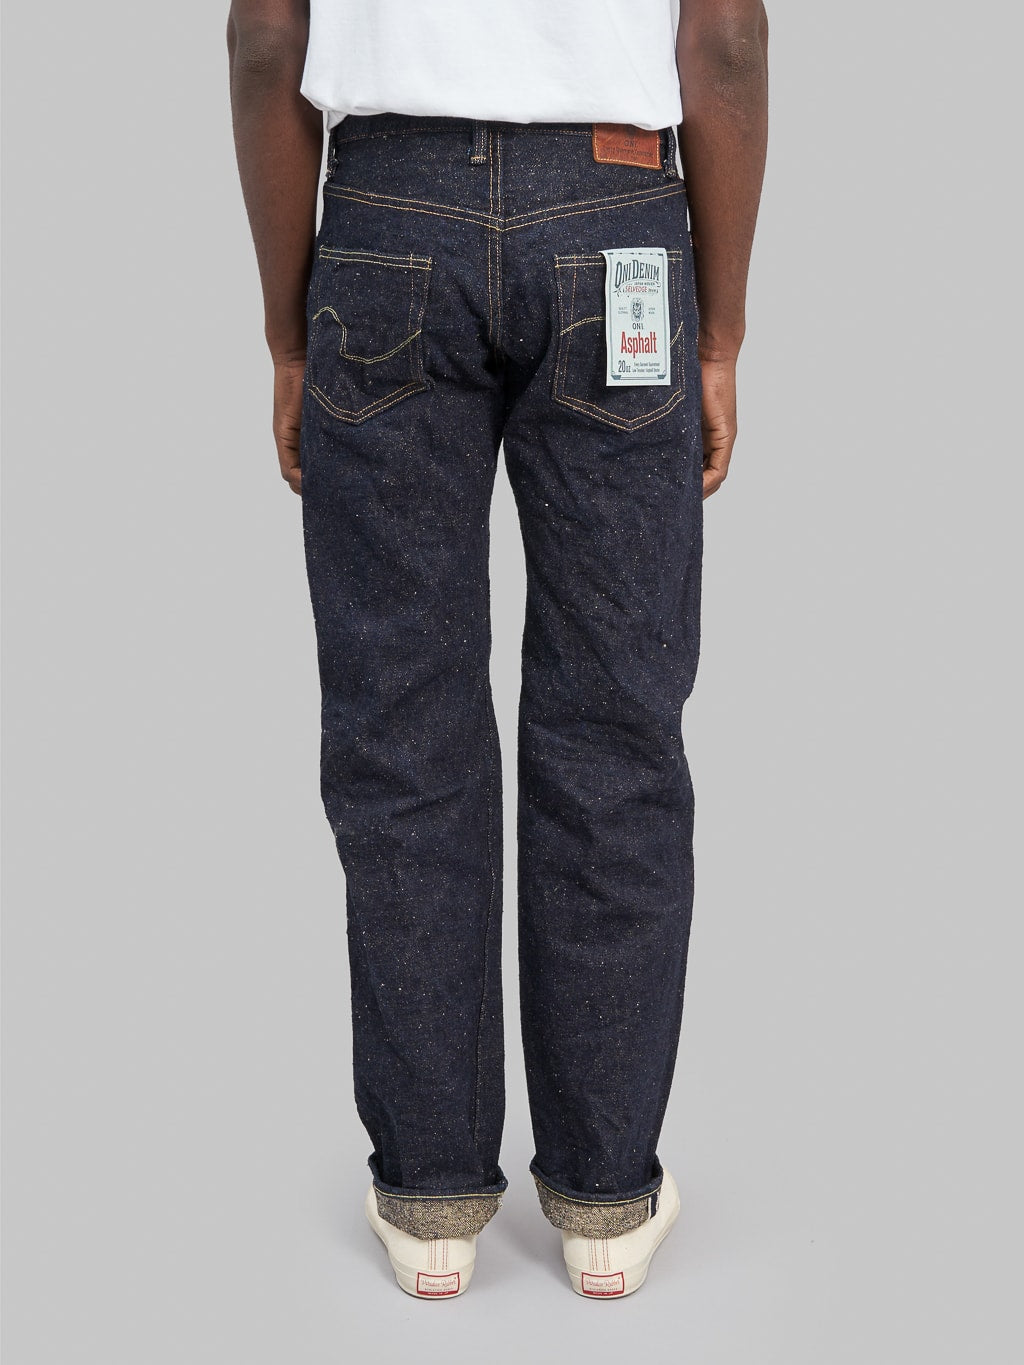 ONI Denim 266 "Asphalt" 20oz Relax Straight Jeans